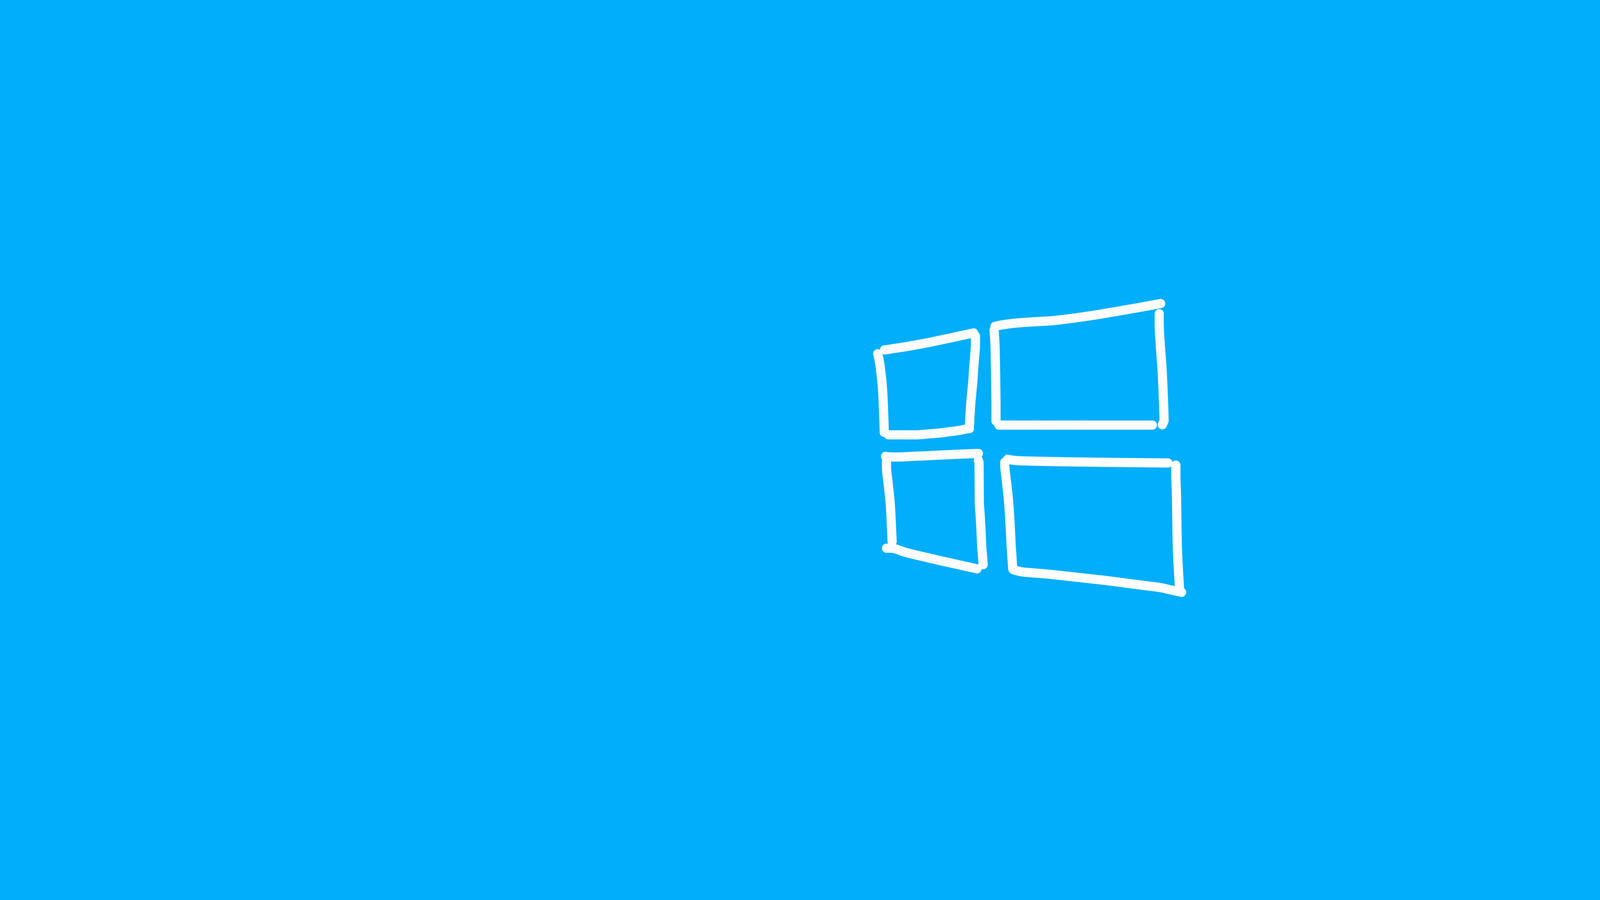 Бесплатное фото Windows 10 на голубом фоне